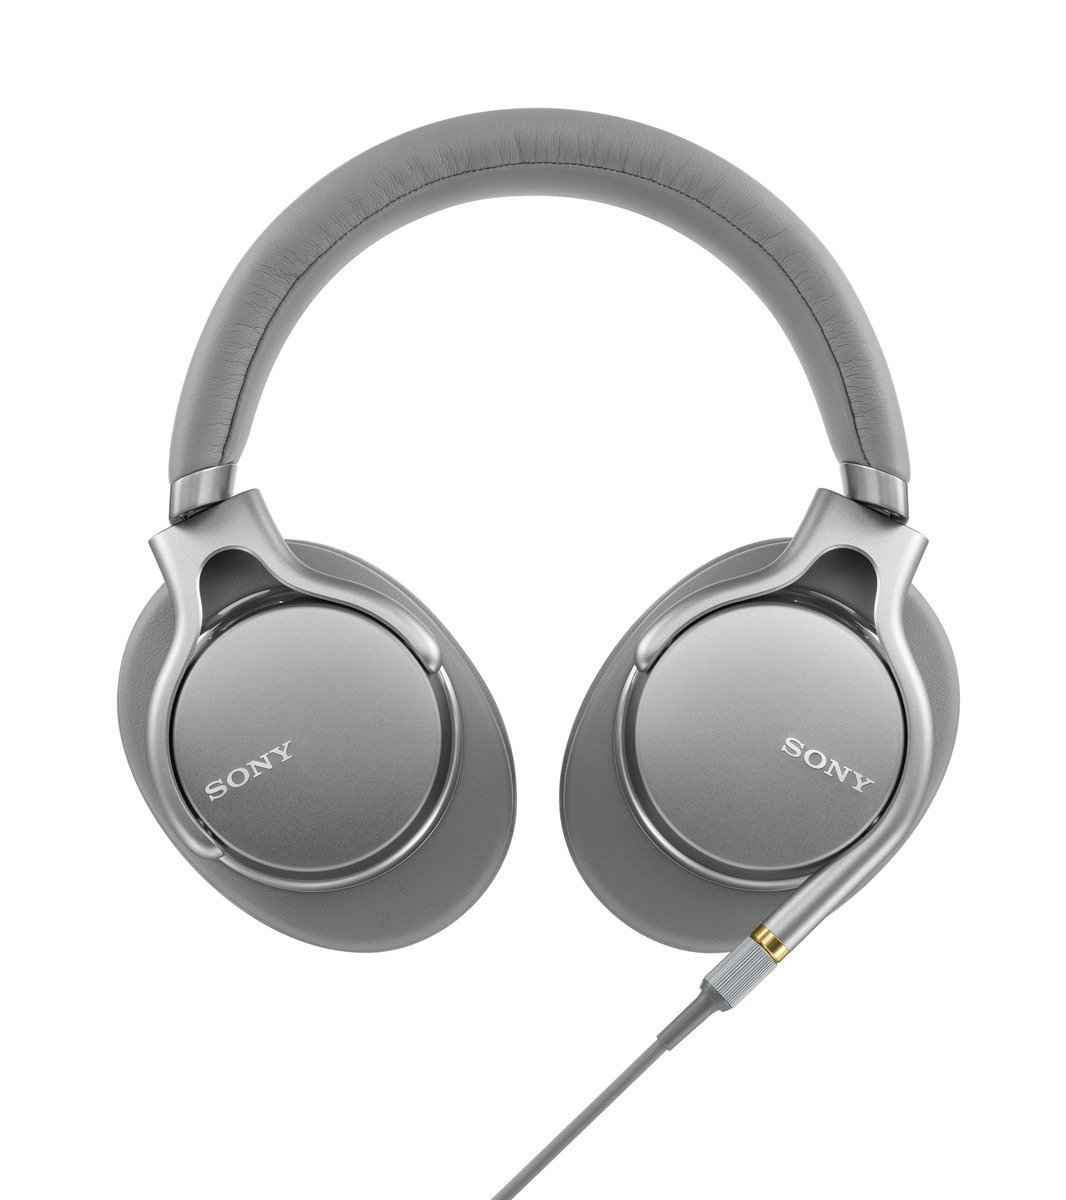 Sony MDR-1AM2 price in uk